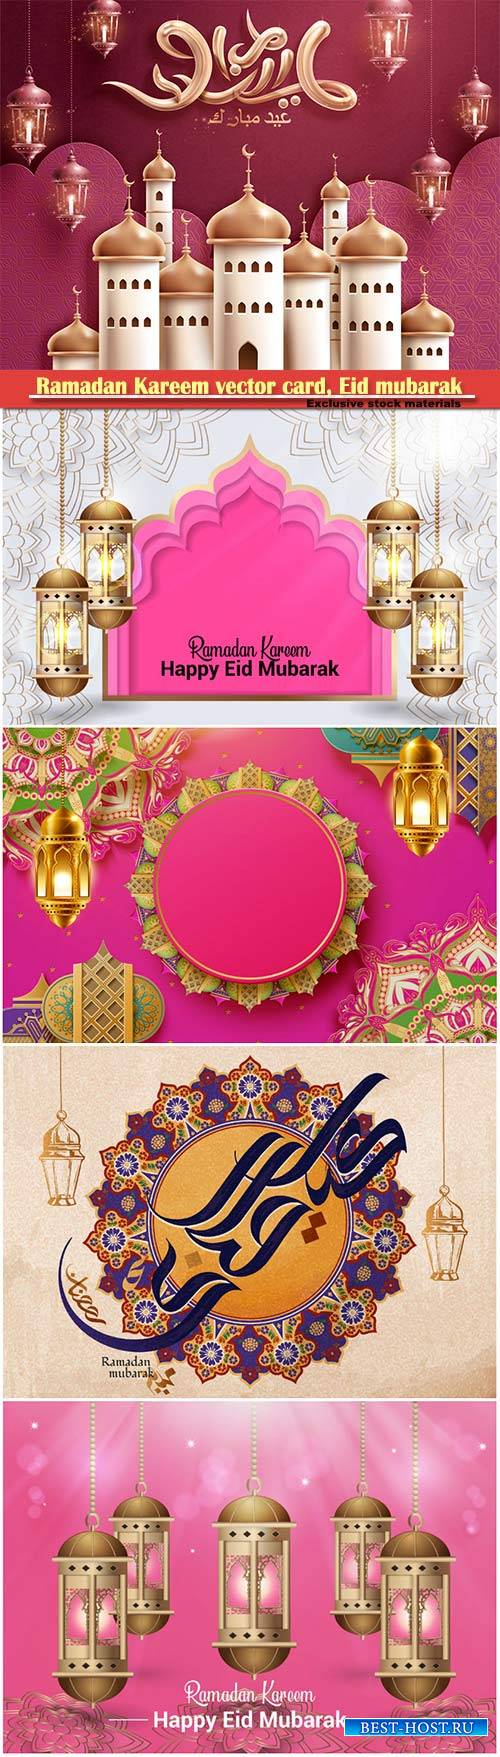 Ramadan Kareem vector card, Eid mubarak calligraphy design templates # 29